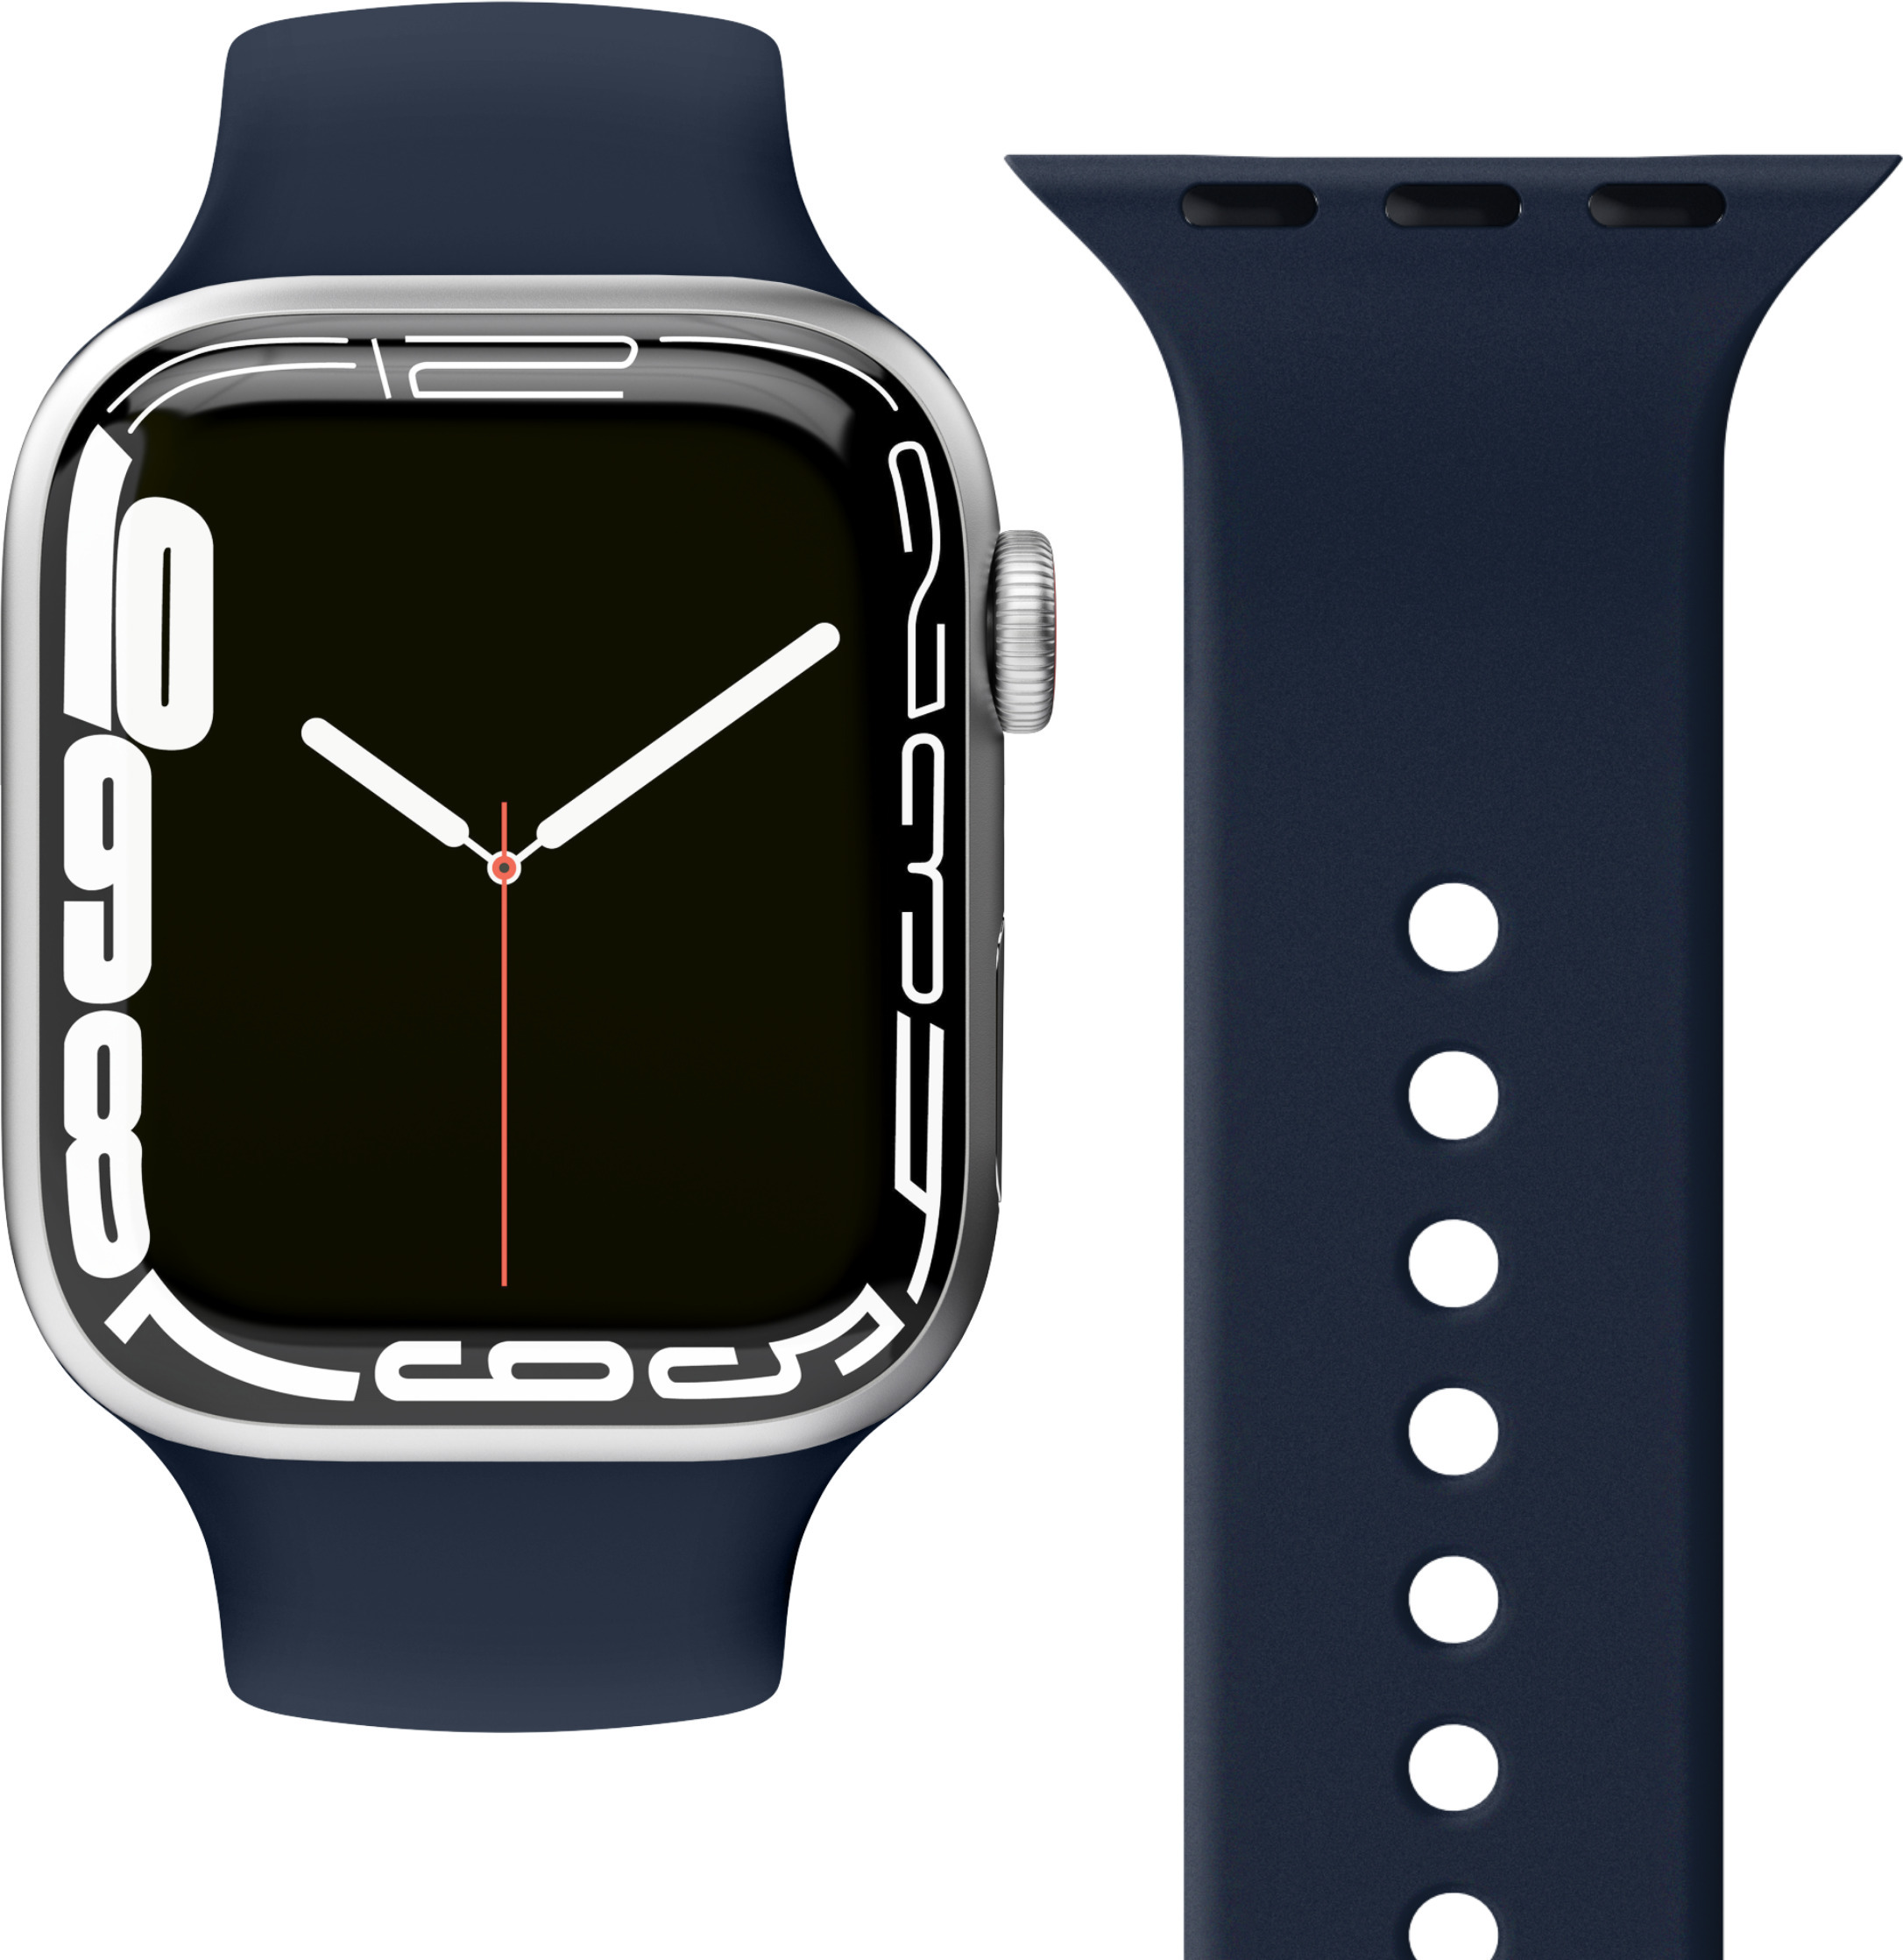 Original Apple watch bands, Apple watch smart accessories